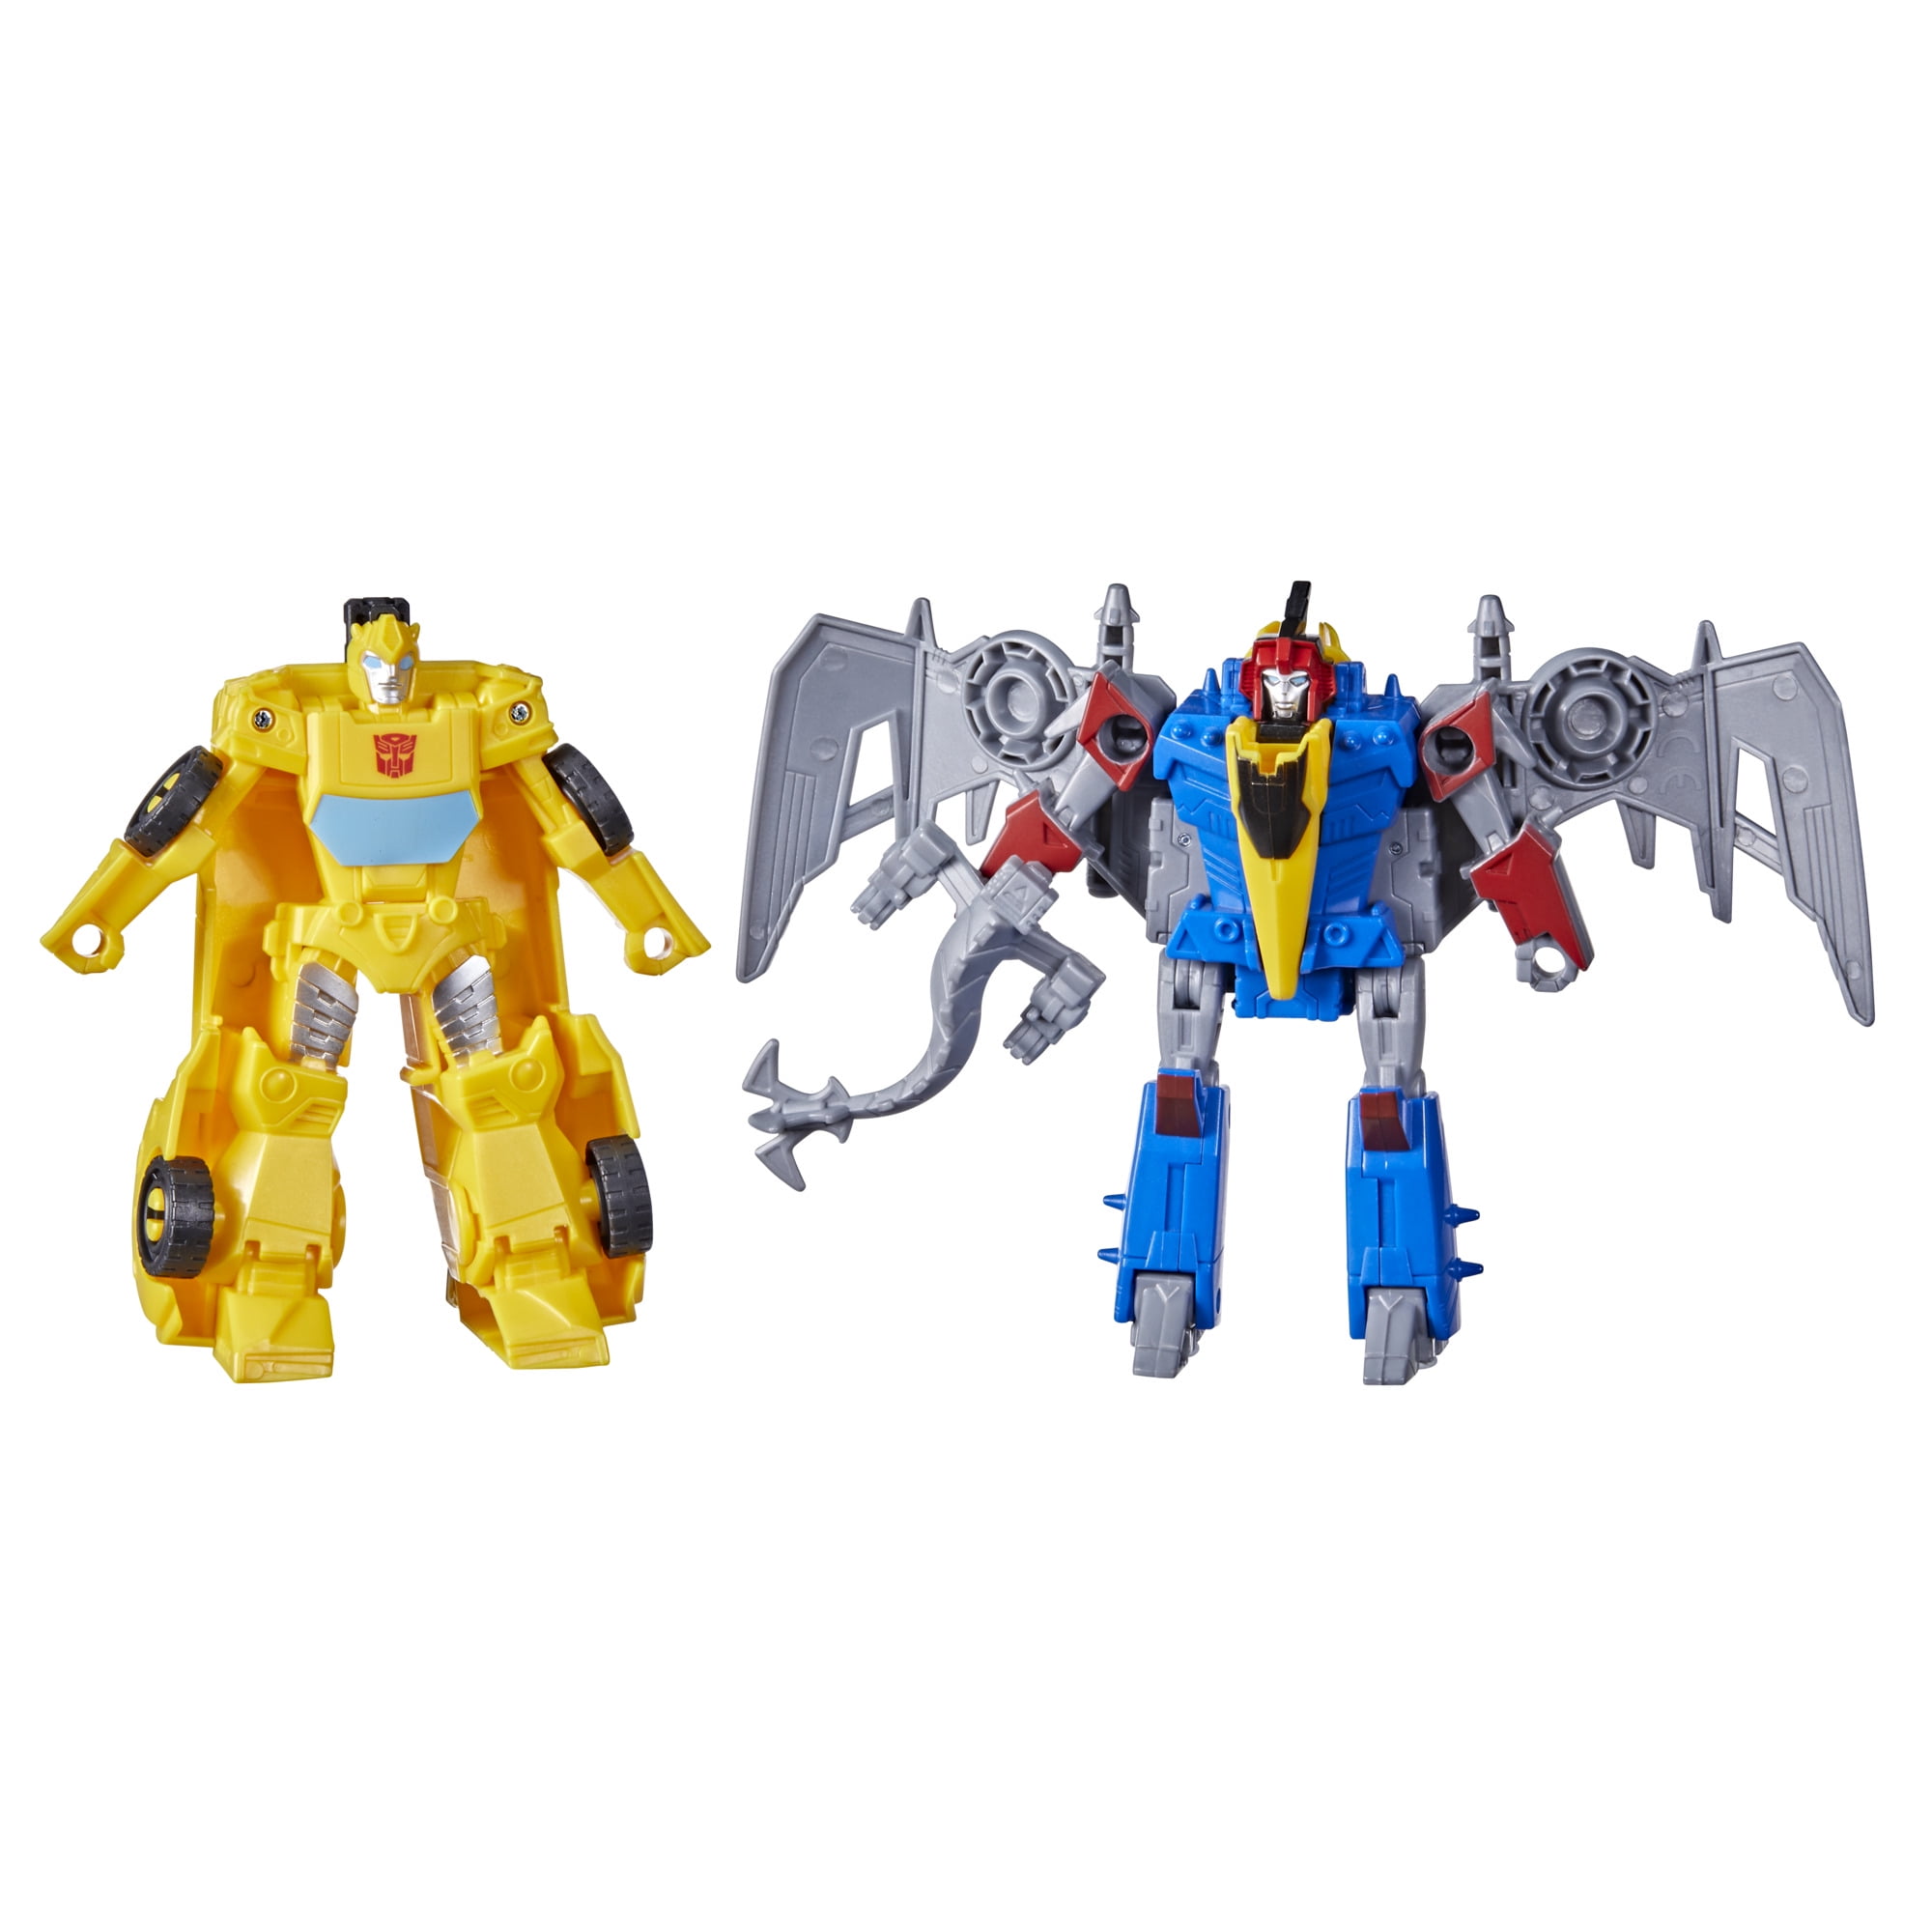 Multicolored Hasbro Transformers Bumblebee Dinner Set 3-Piece 